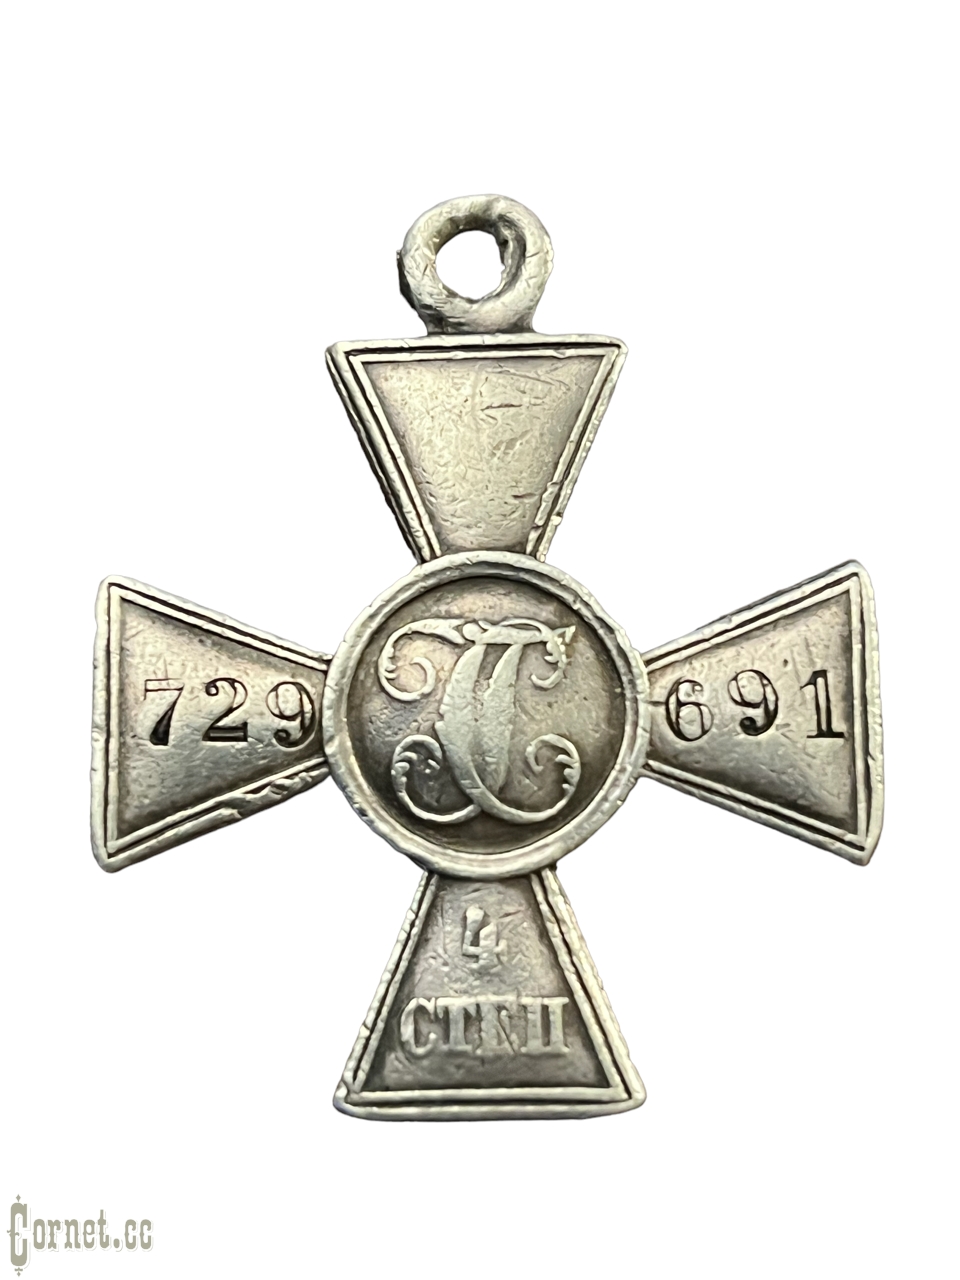 St. George Cross 4 class No 729691